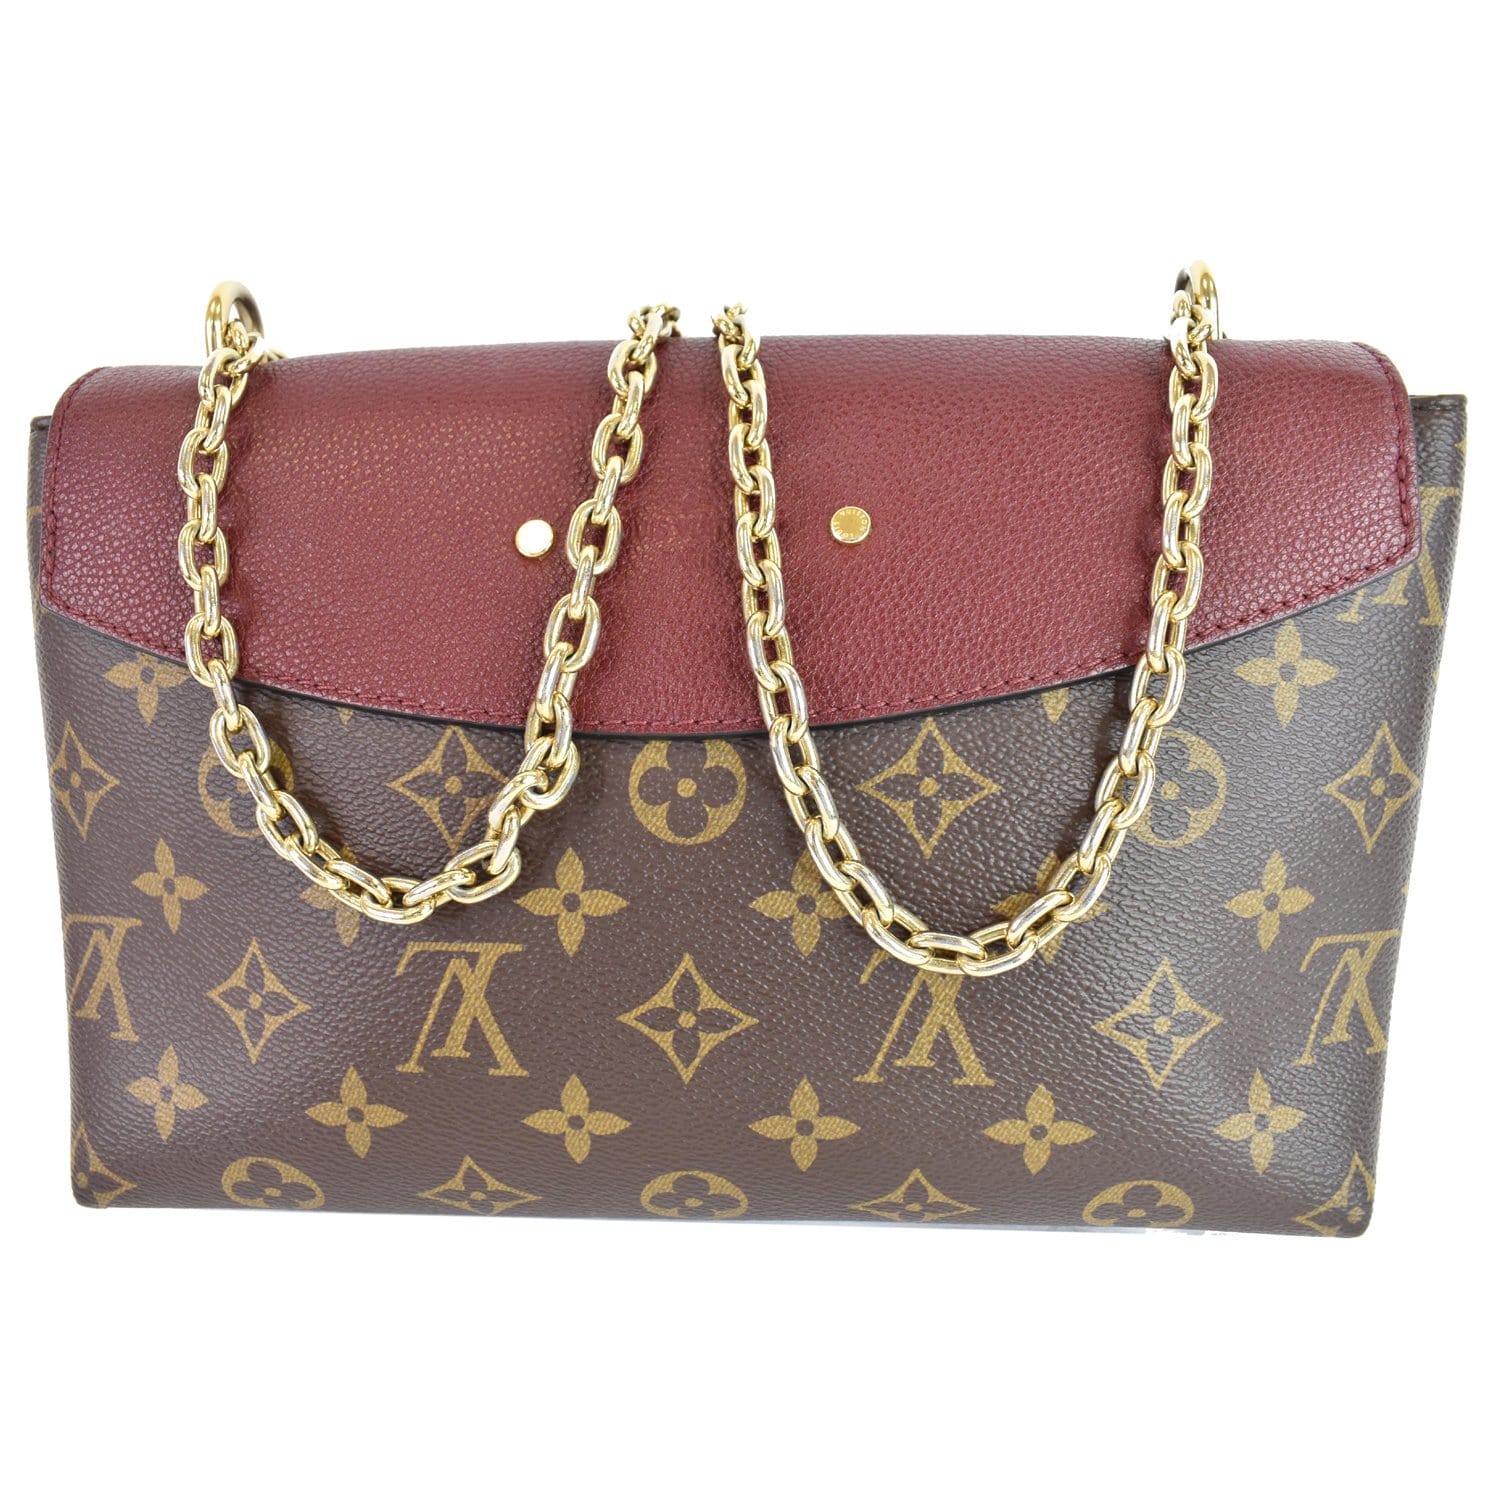 Saint placide leather handbag Louis Vuitton Brown in Leather